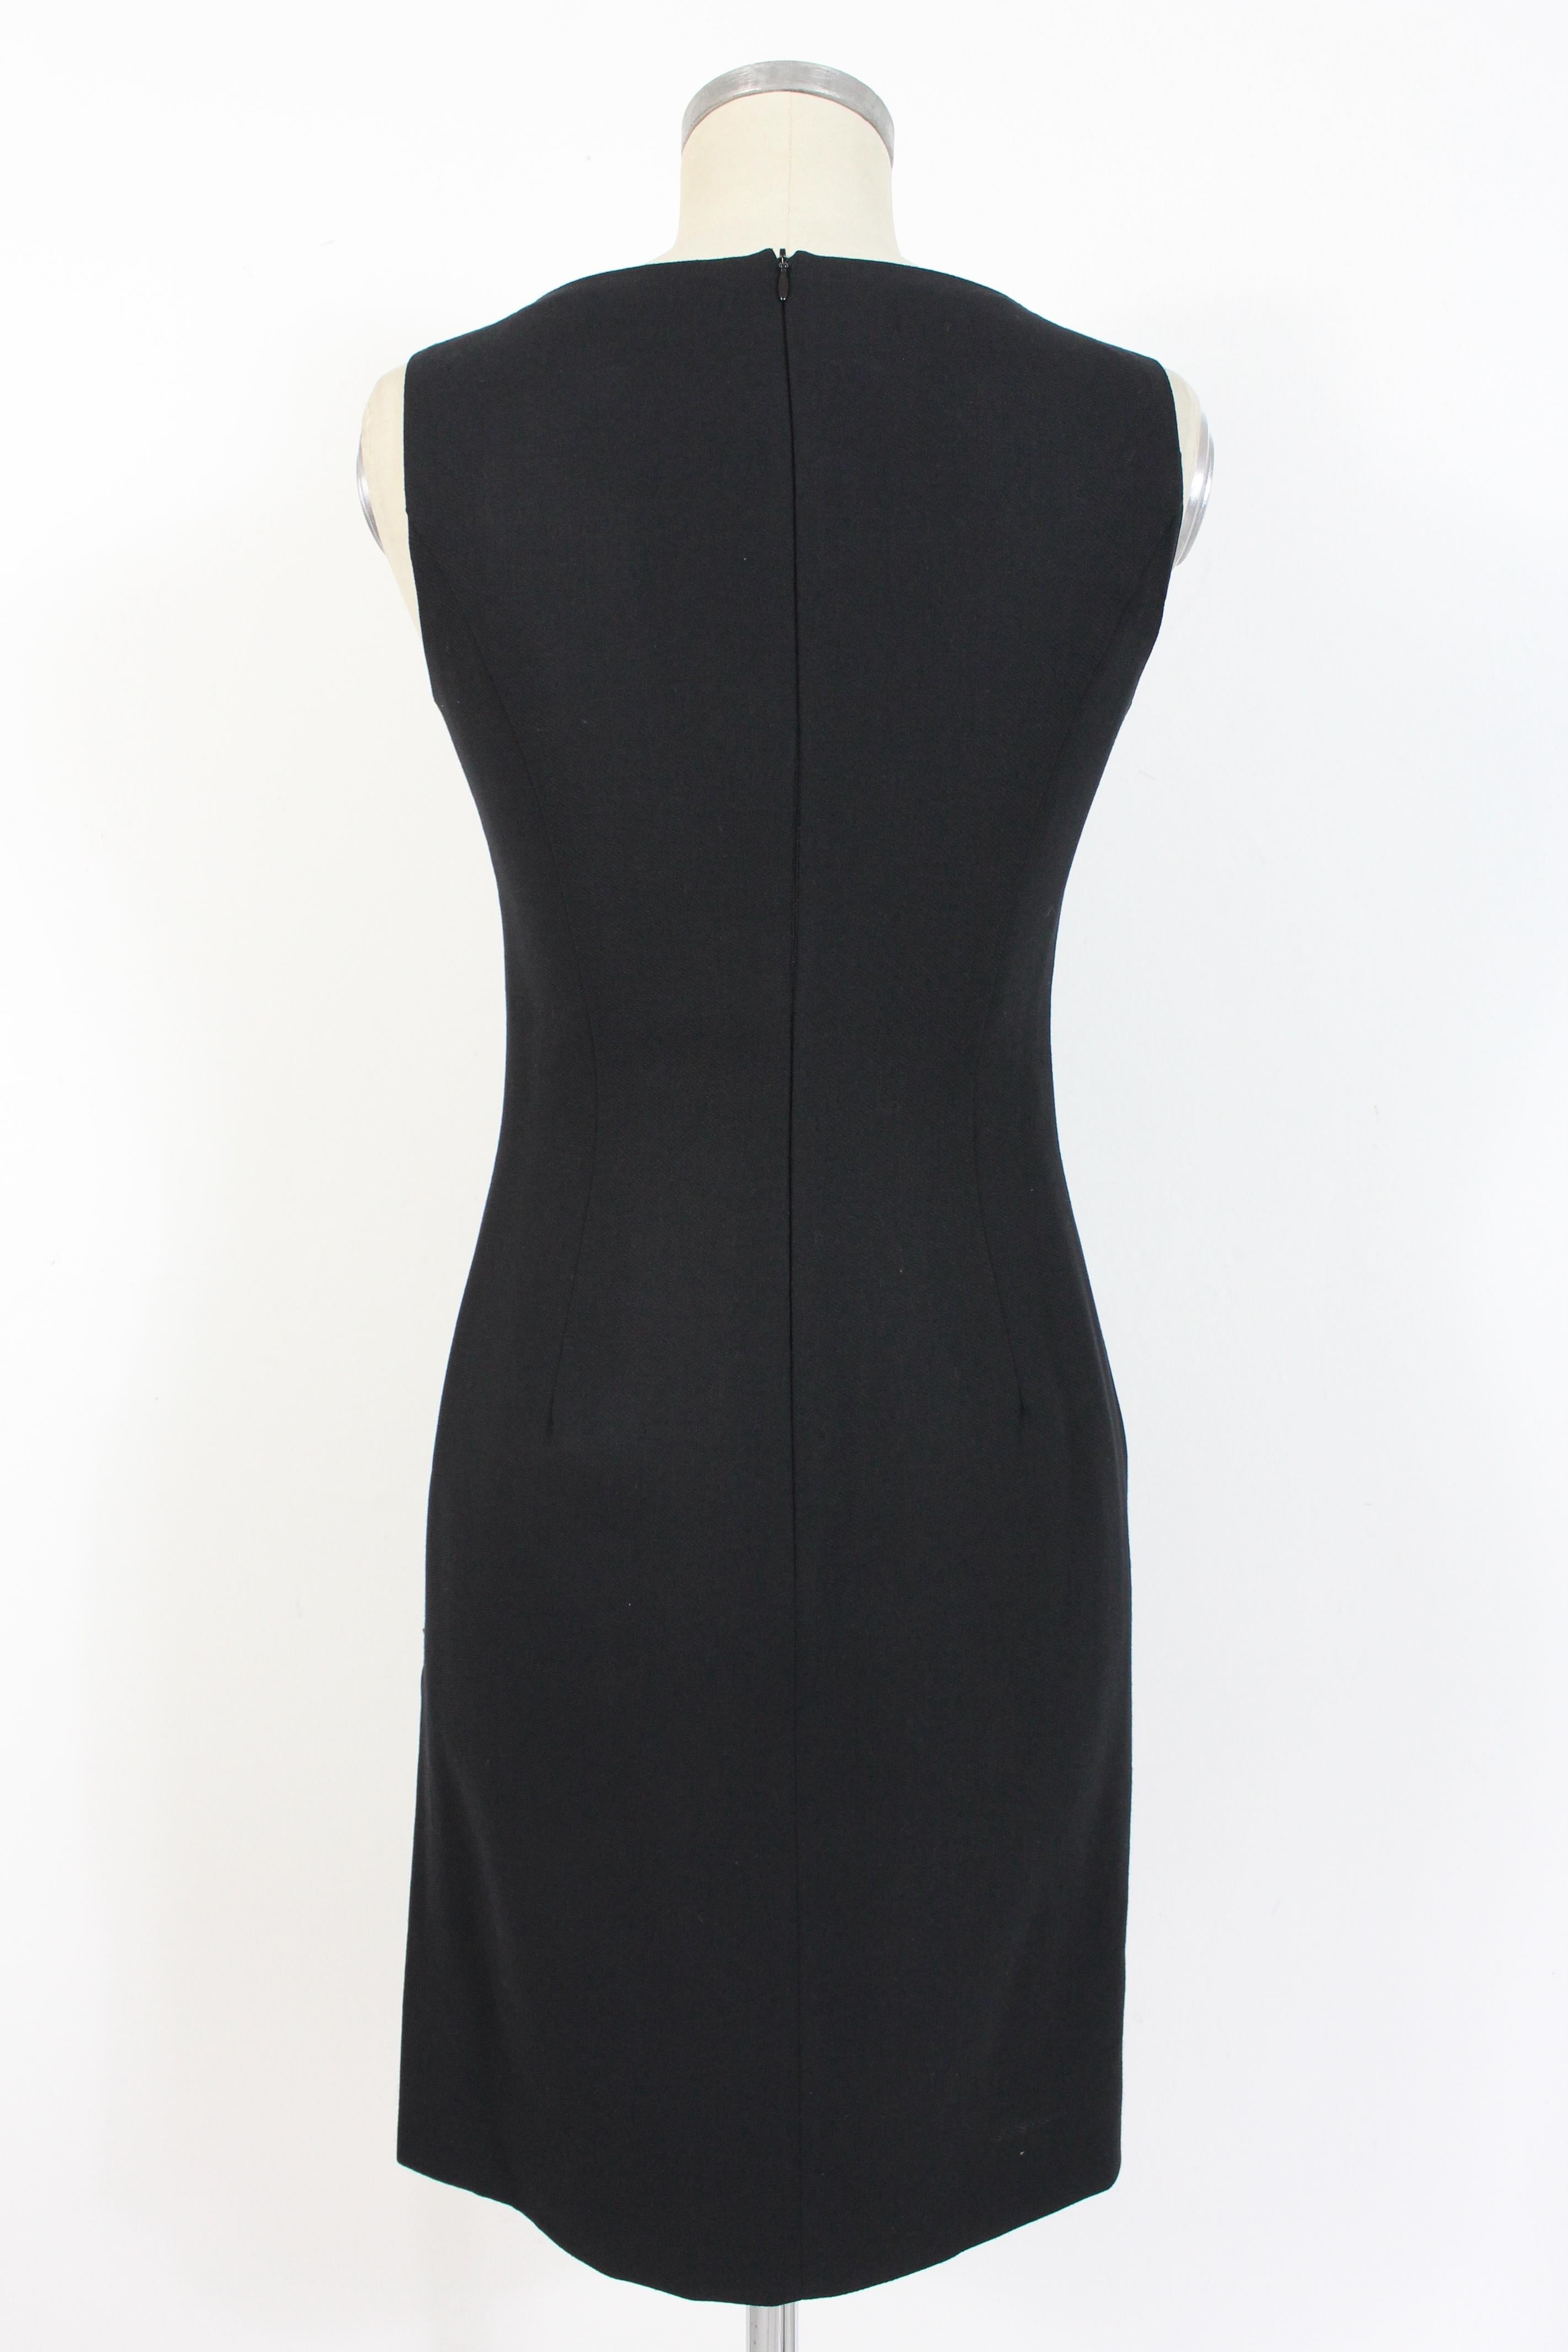 Gianfranco Ferre Black Wool Evening Suit Dress 3